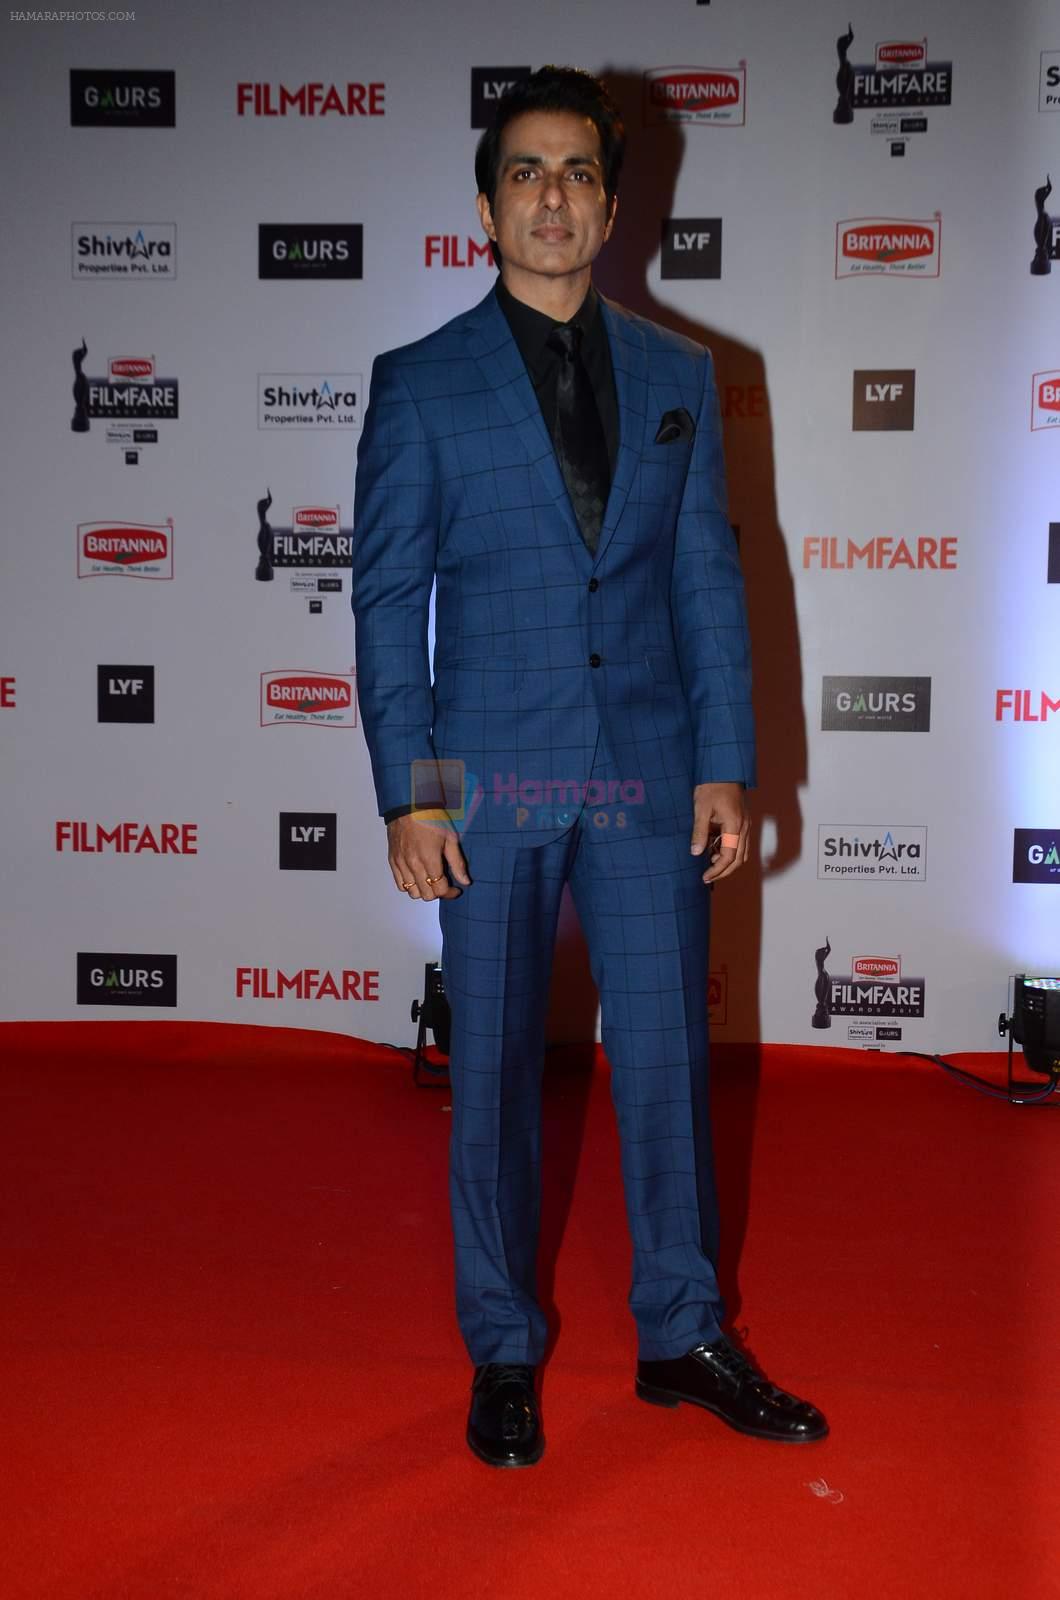 Sonu Sood at Filmfare Awards 2016 on 15th Jan 2016